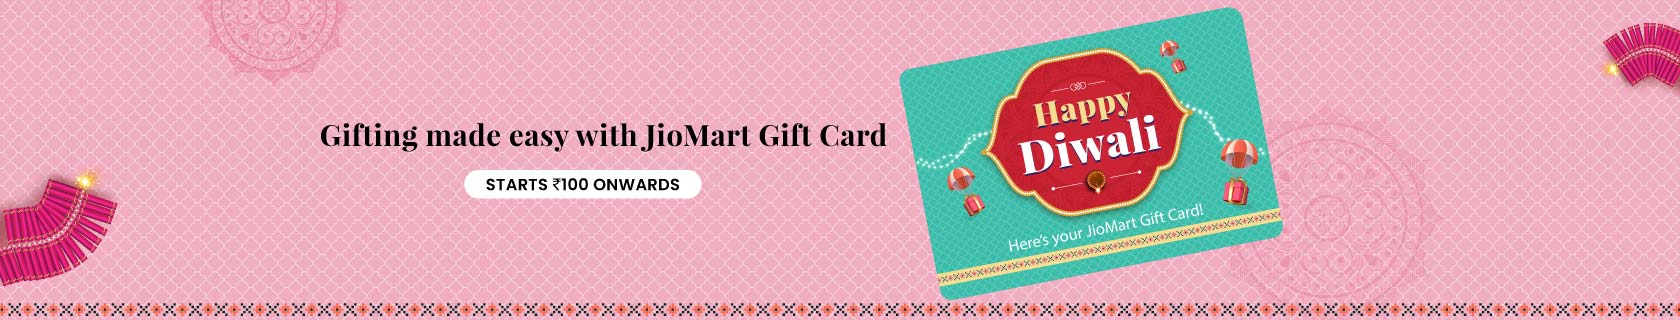 Jiomart gift card_Web